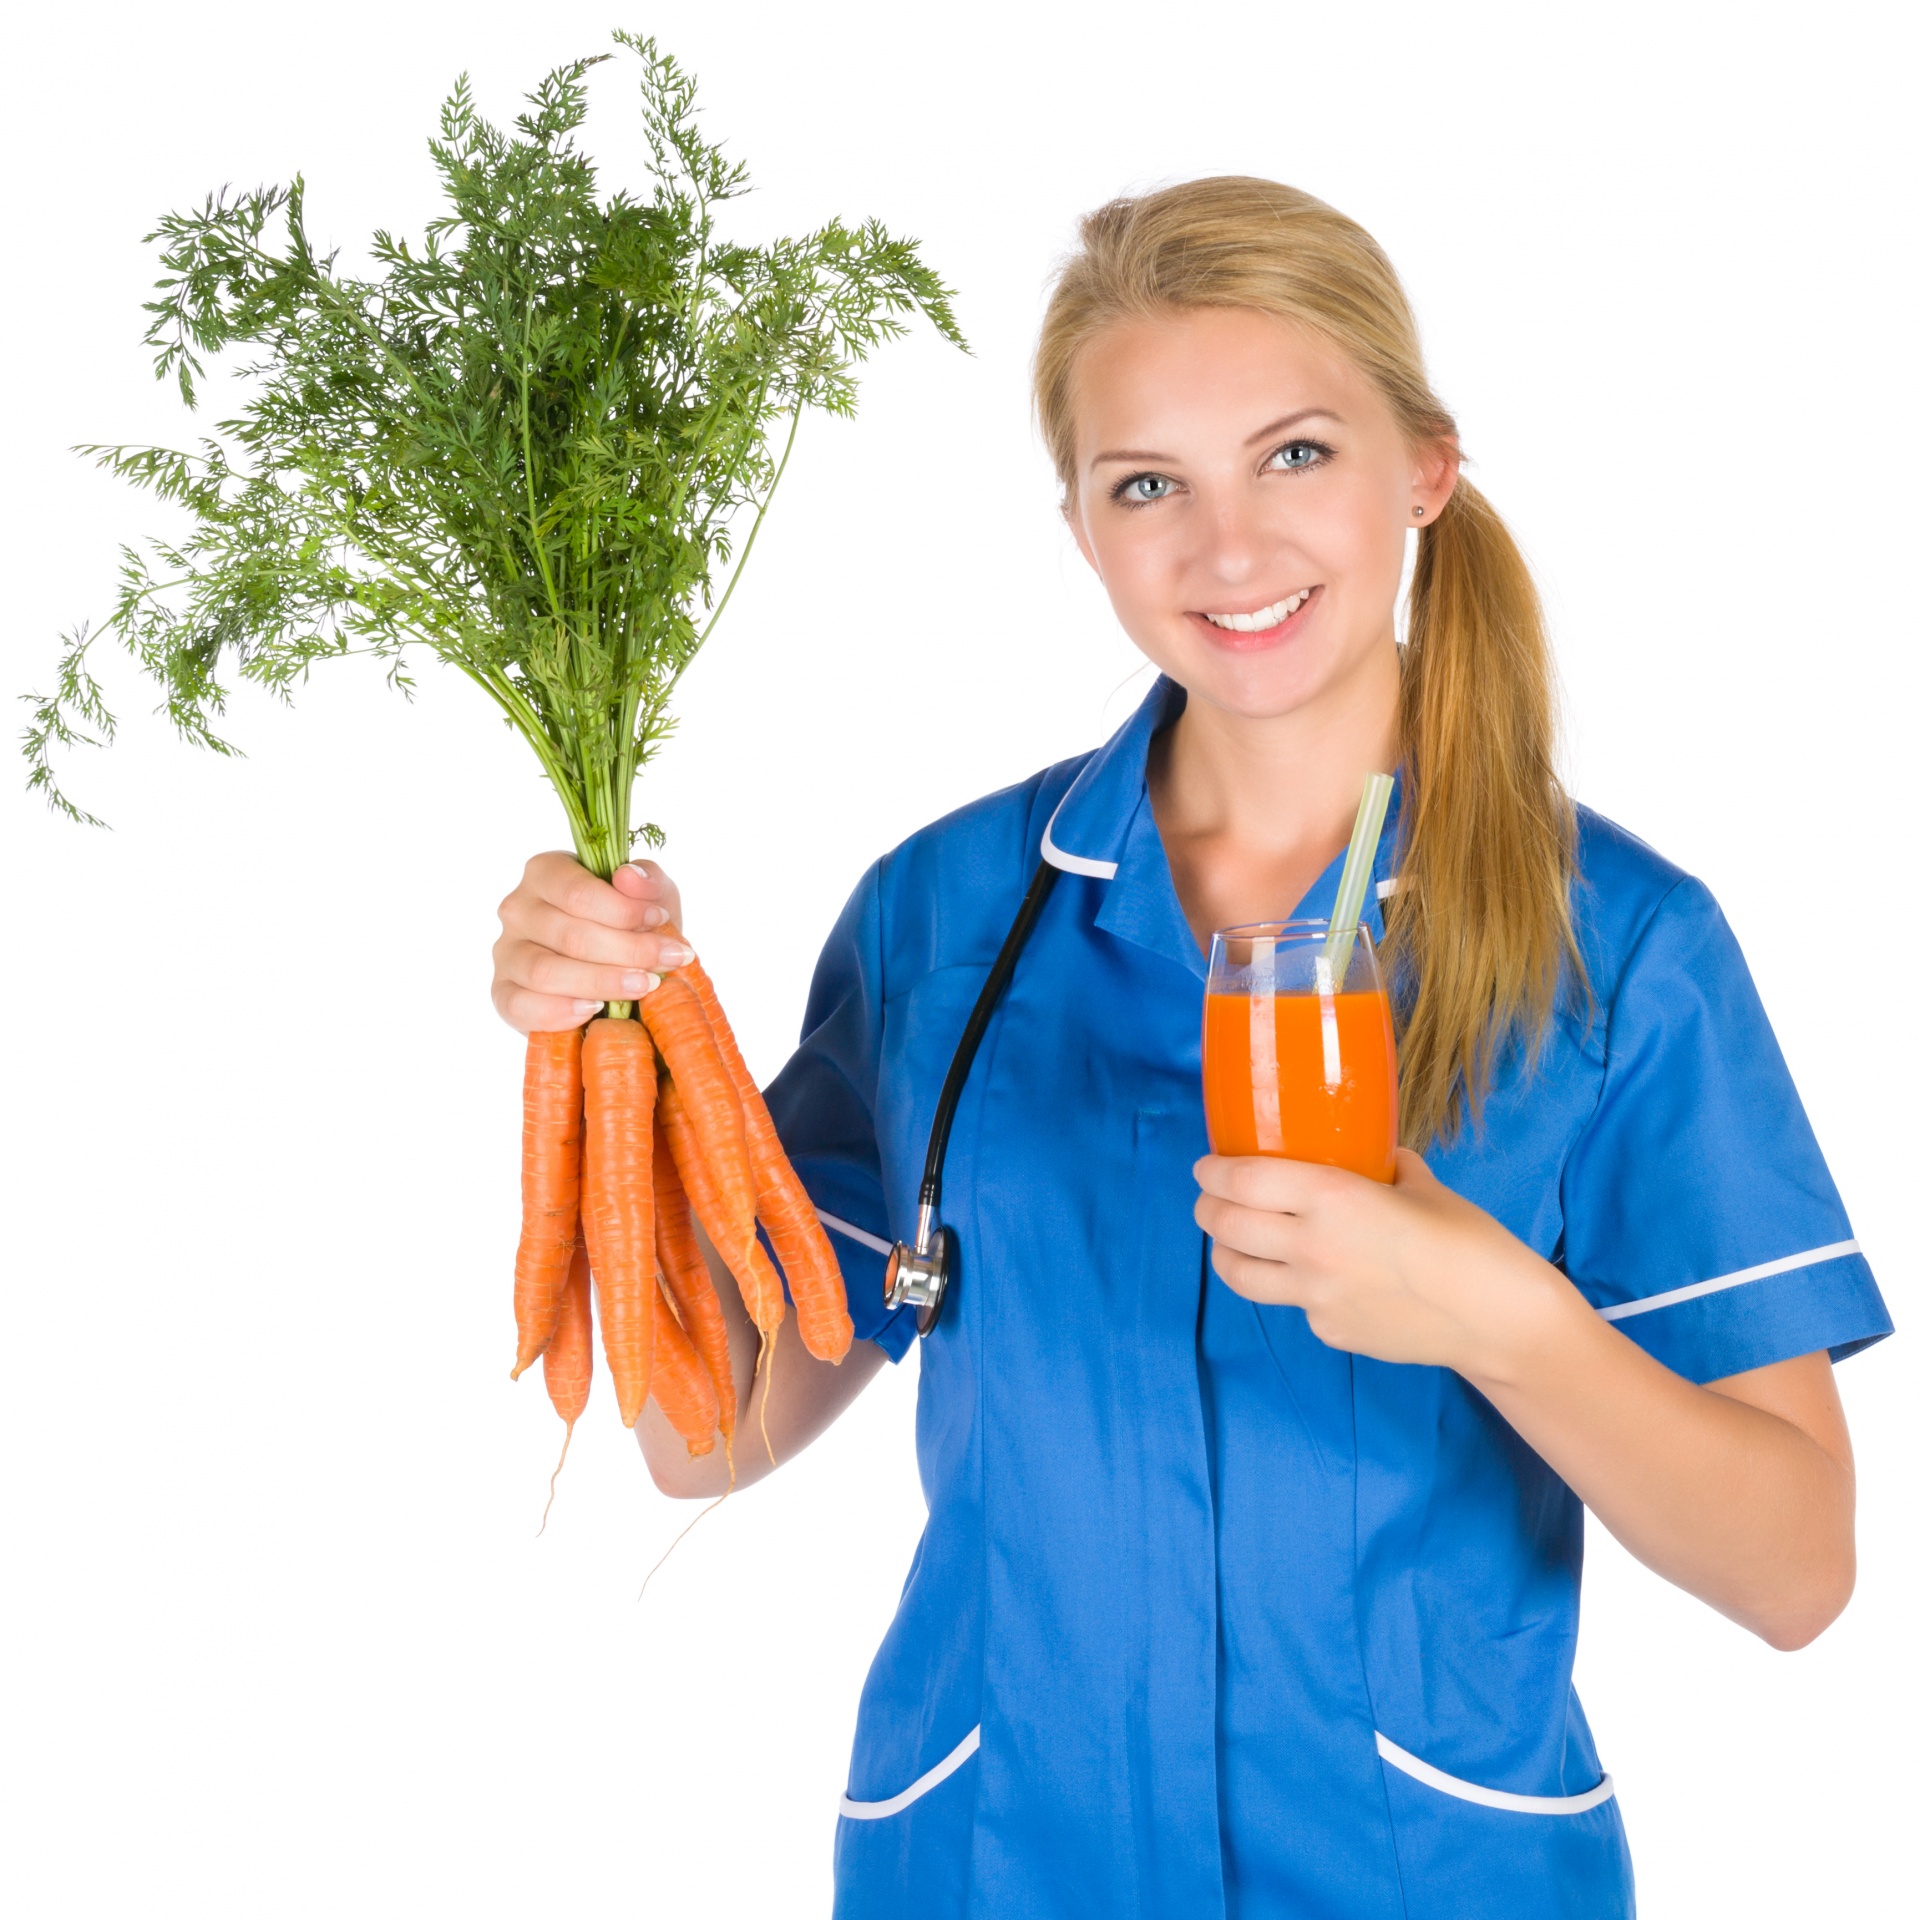 Nurse Holding Carrots